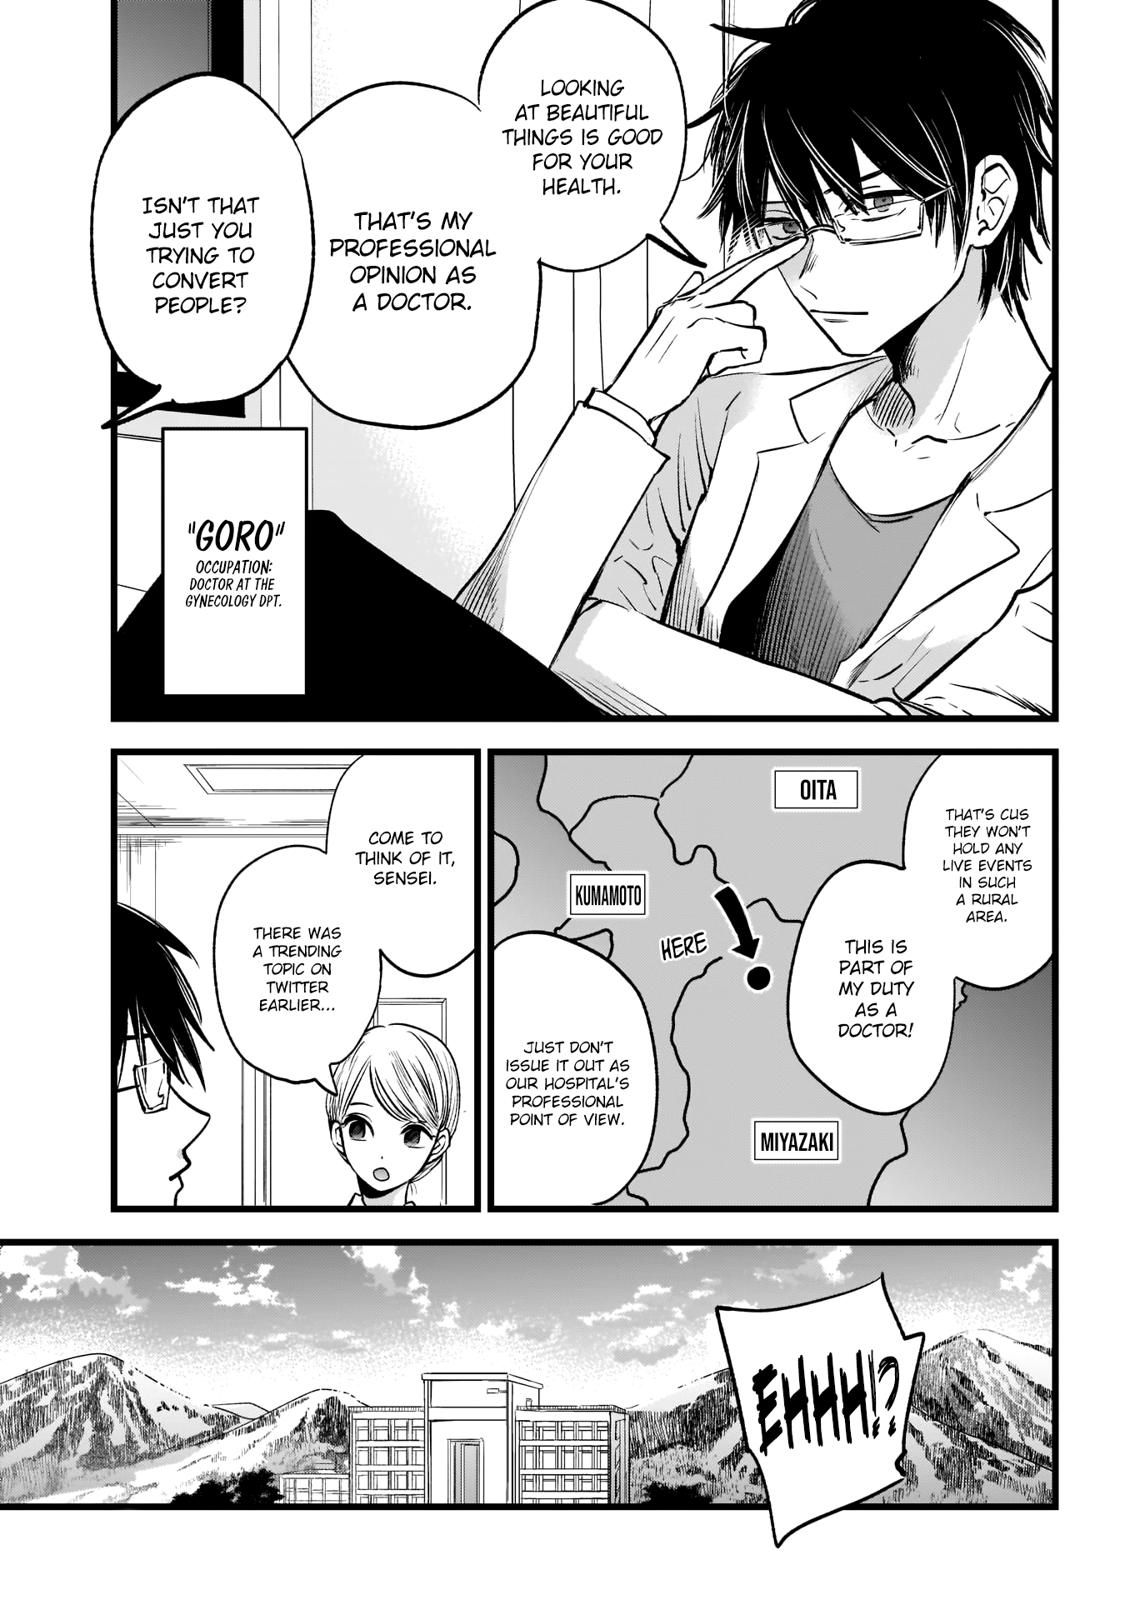 Oshi No Ko Manga Manga Chapter - 1 - image 7